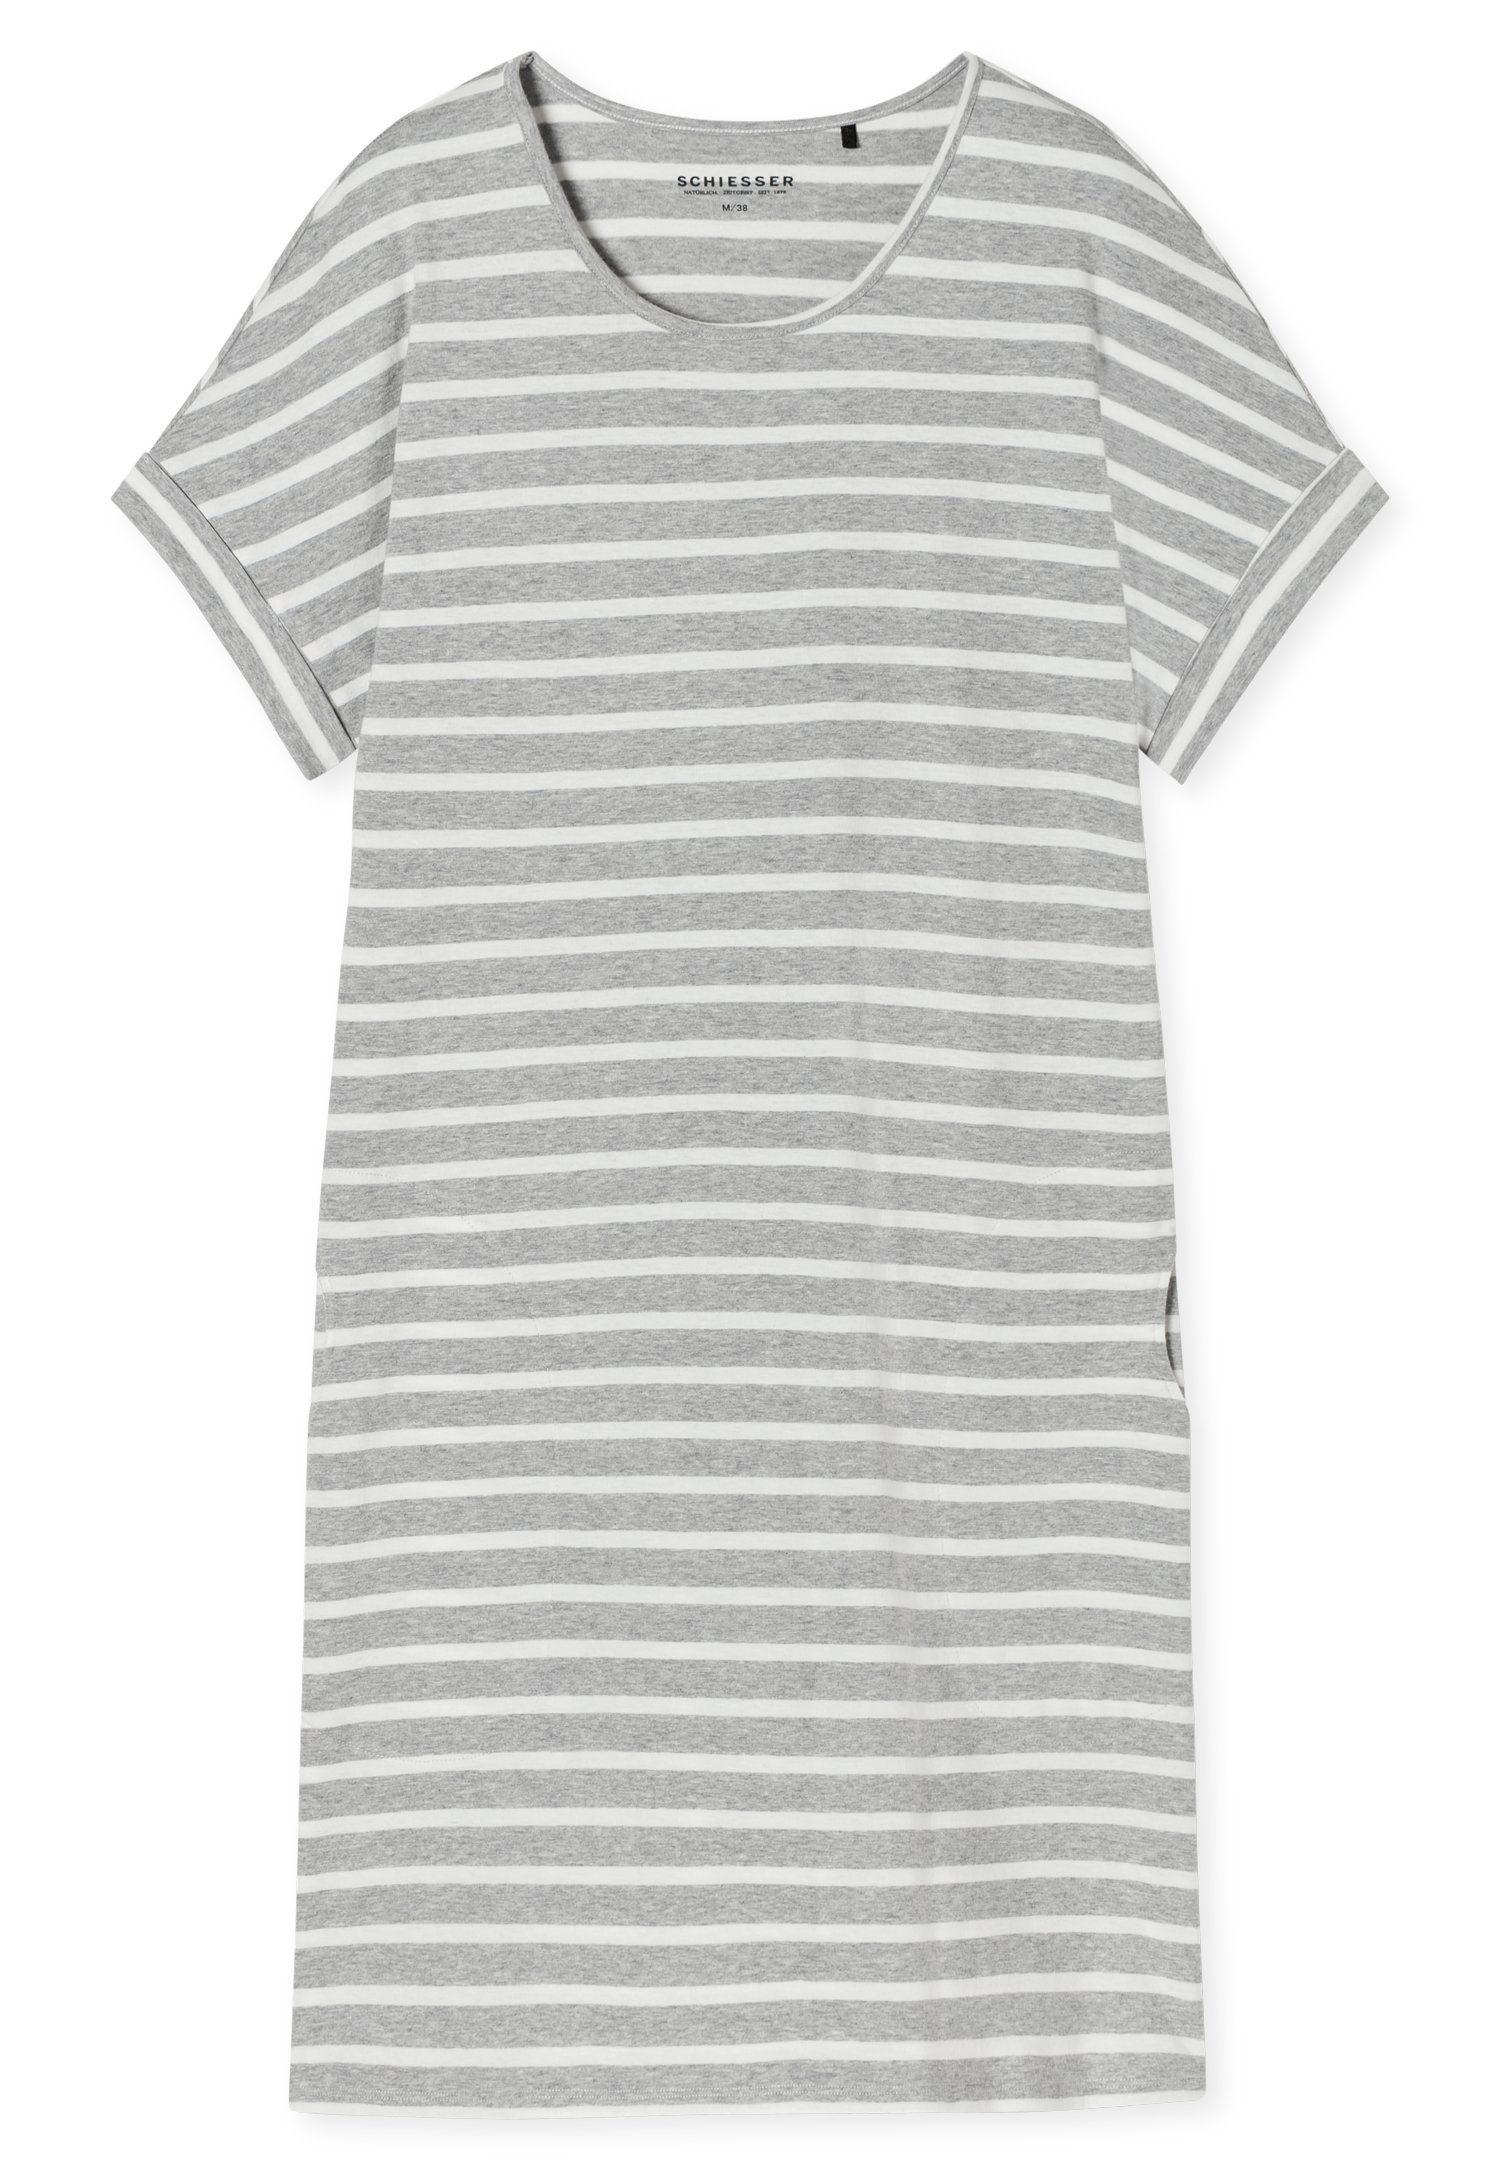 Schiesser Longshirt mit grau-meliertem Design grau-mel